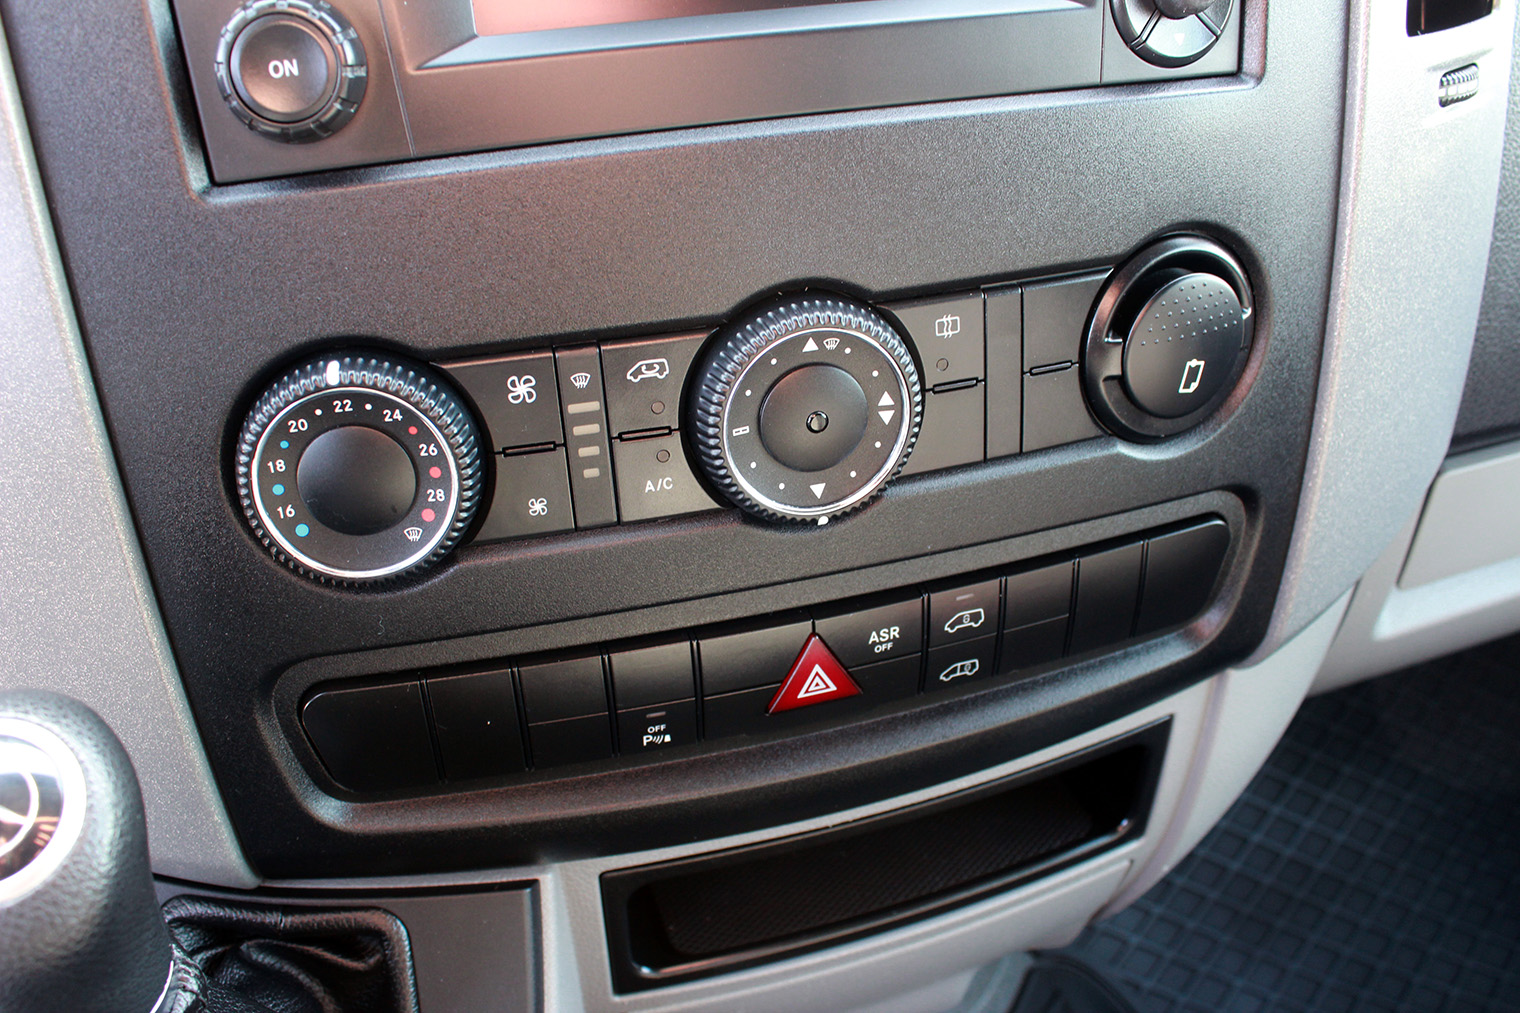 Похоже на климат-контроль, но это не он: нет кнопки Auto. Фото: Best Auto Photo / Shutterstock